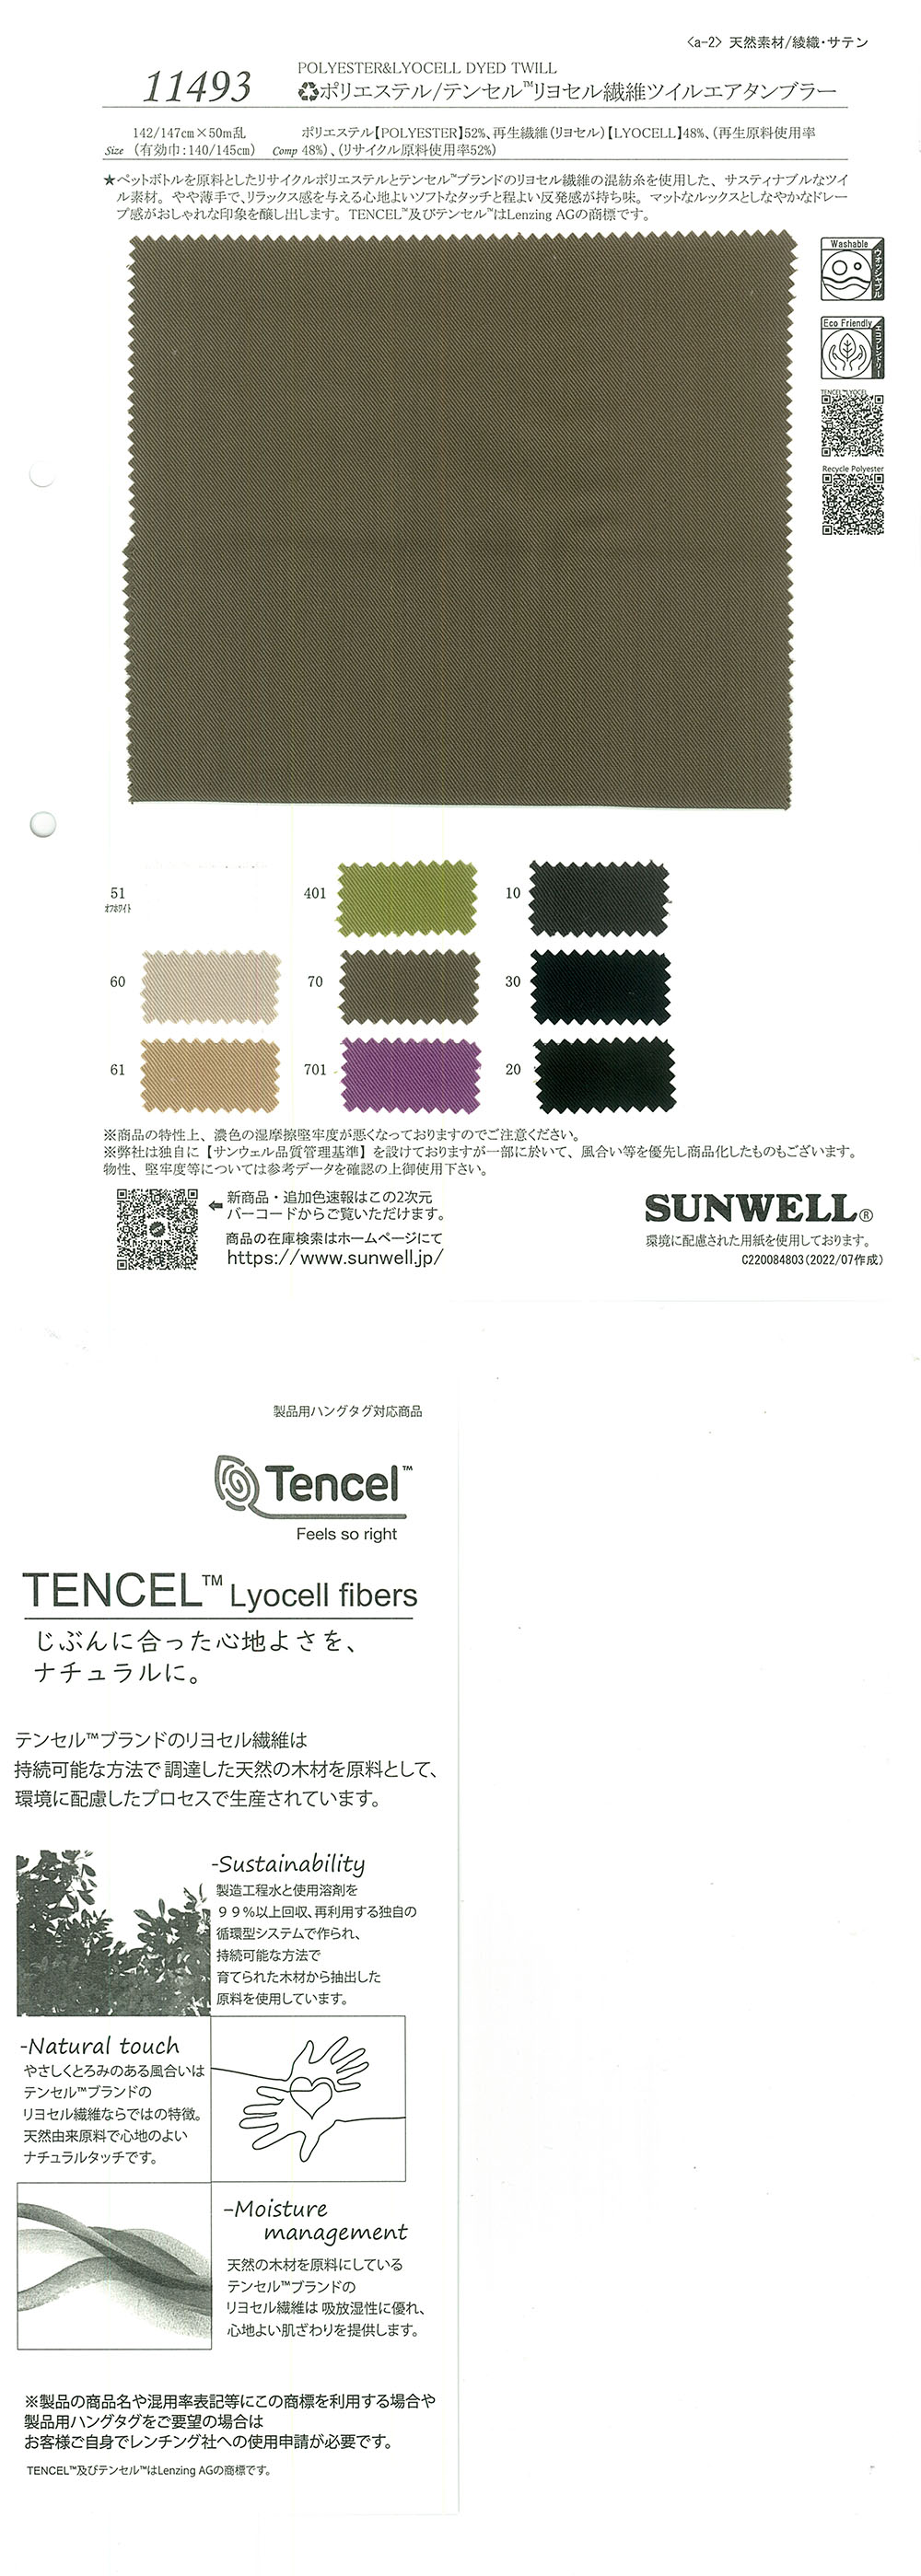 11493 (Li) 聚酯纤维/Tencel (TM) 莱赛尔 Fiber 斜纹空气滚筒[面料] SUNWELL